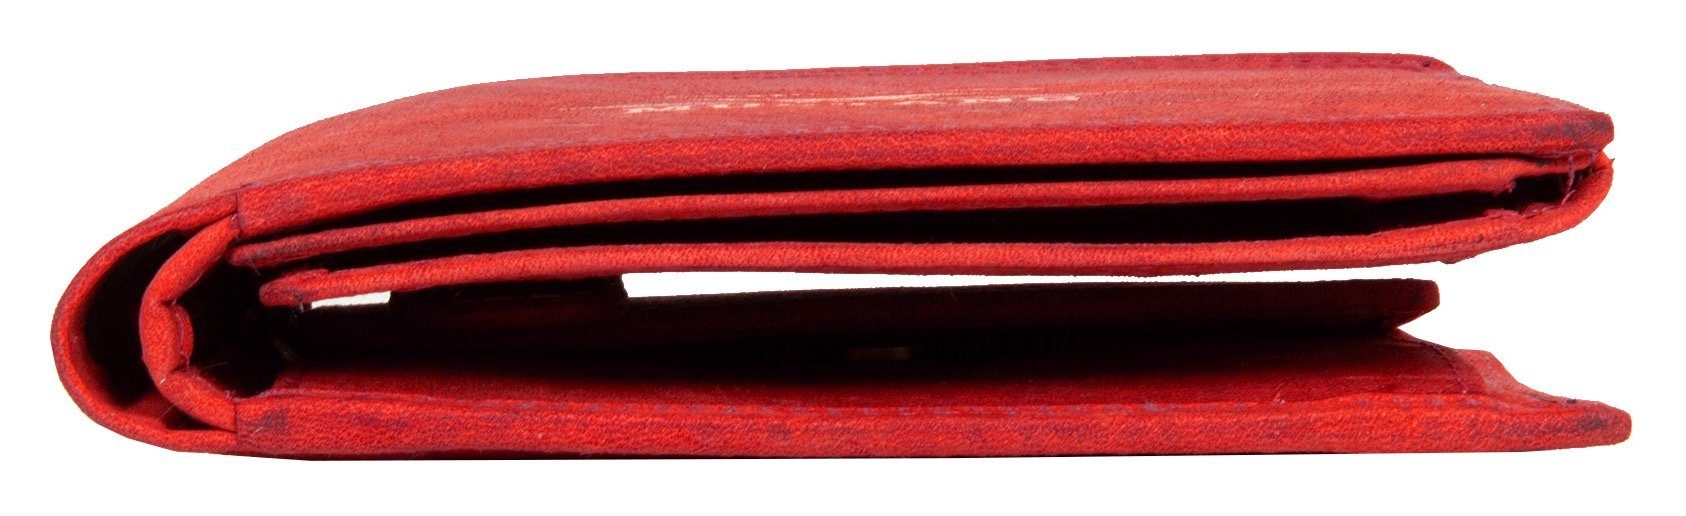 MUSTANG Geldbörse Tampa leather wallet Logo red opening, mit Print long side